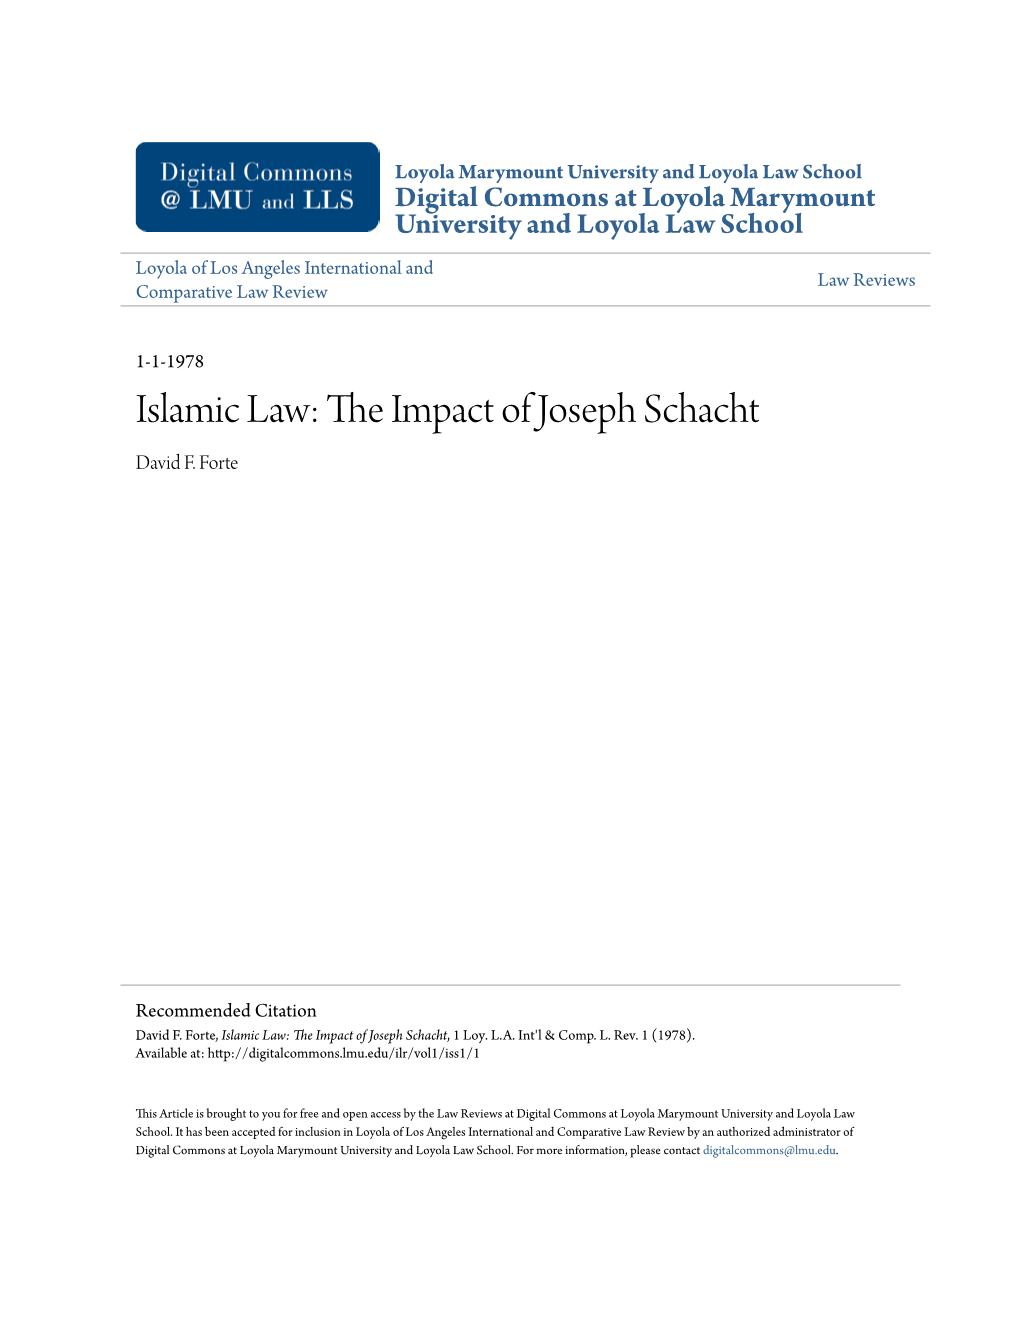 Islamic Law: the Impact of Joseph Schacht, 1 Loy